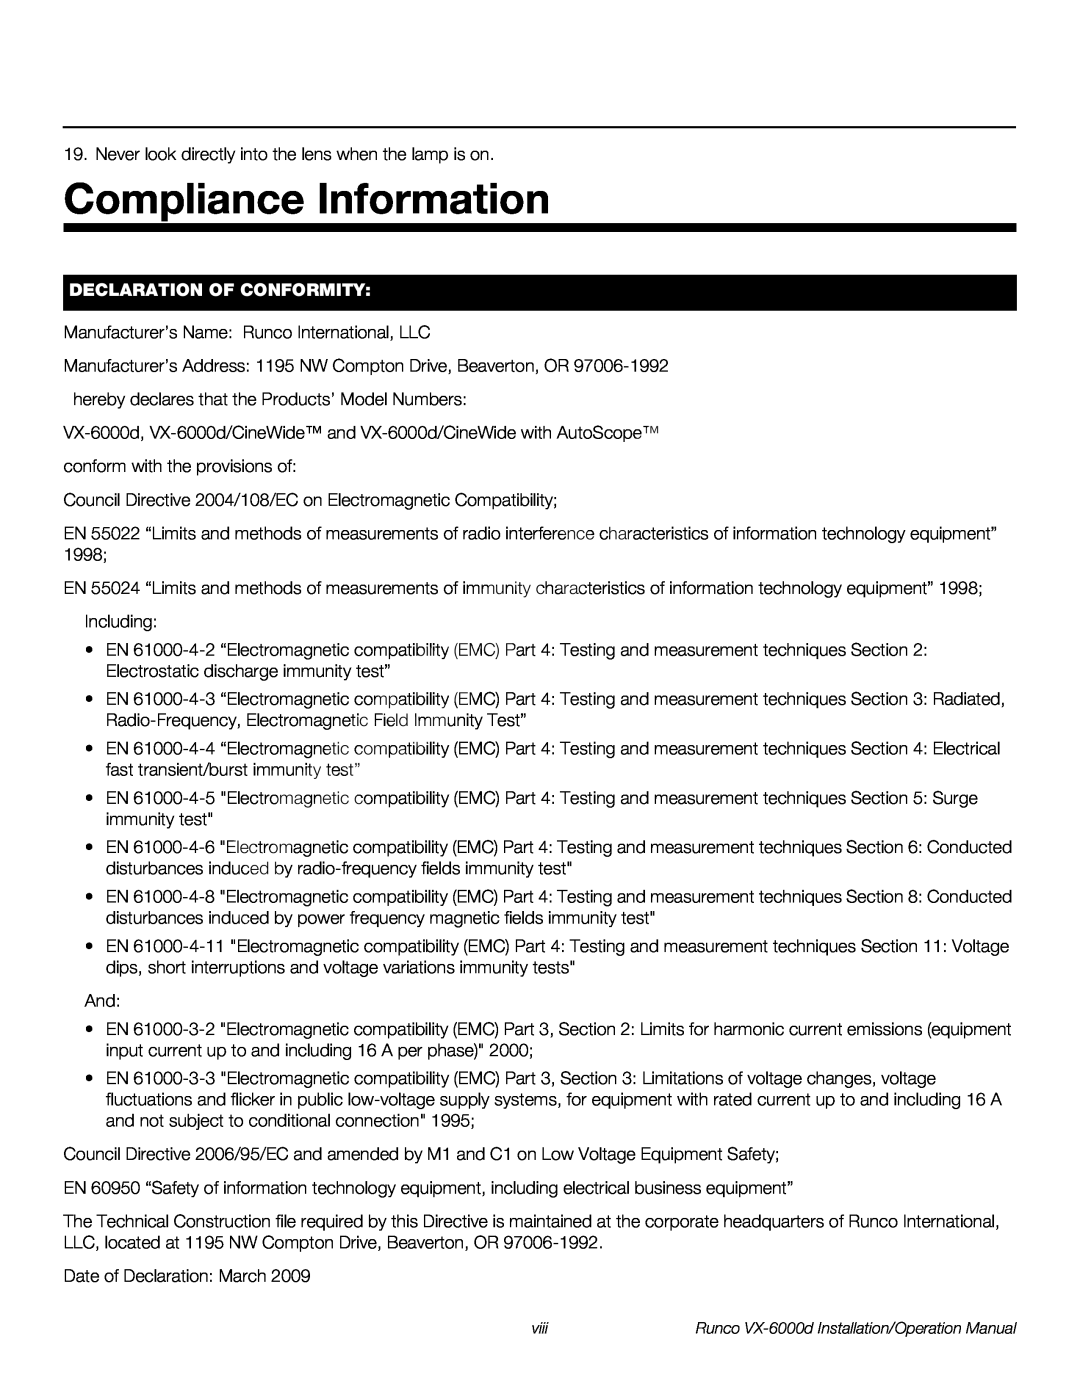 Runco VX-6000D operation manual Compliance Information, Declaration Of Conformity 